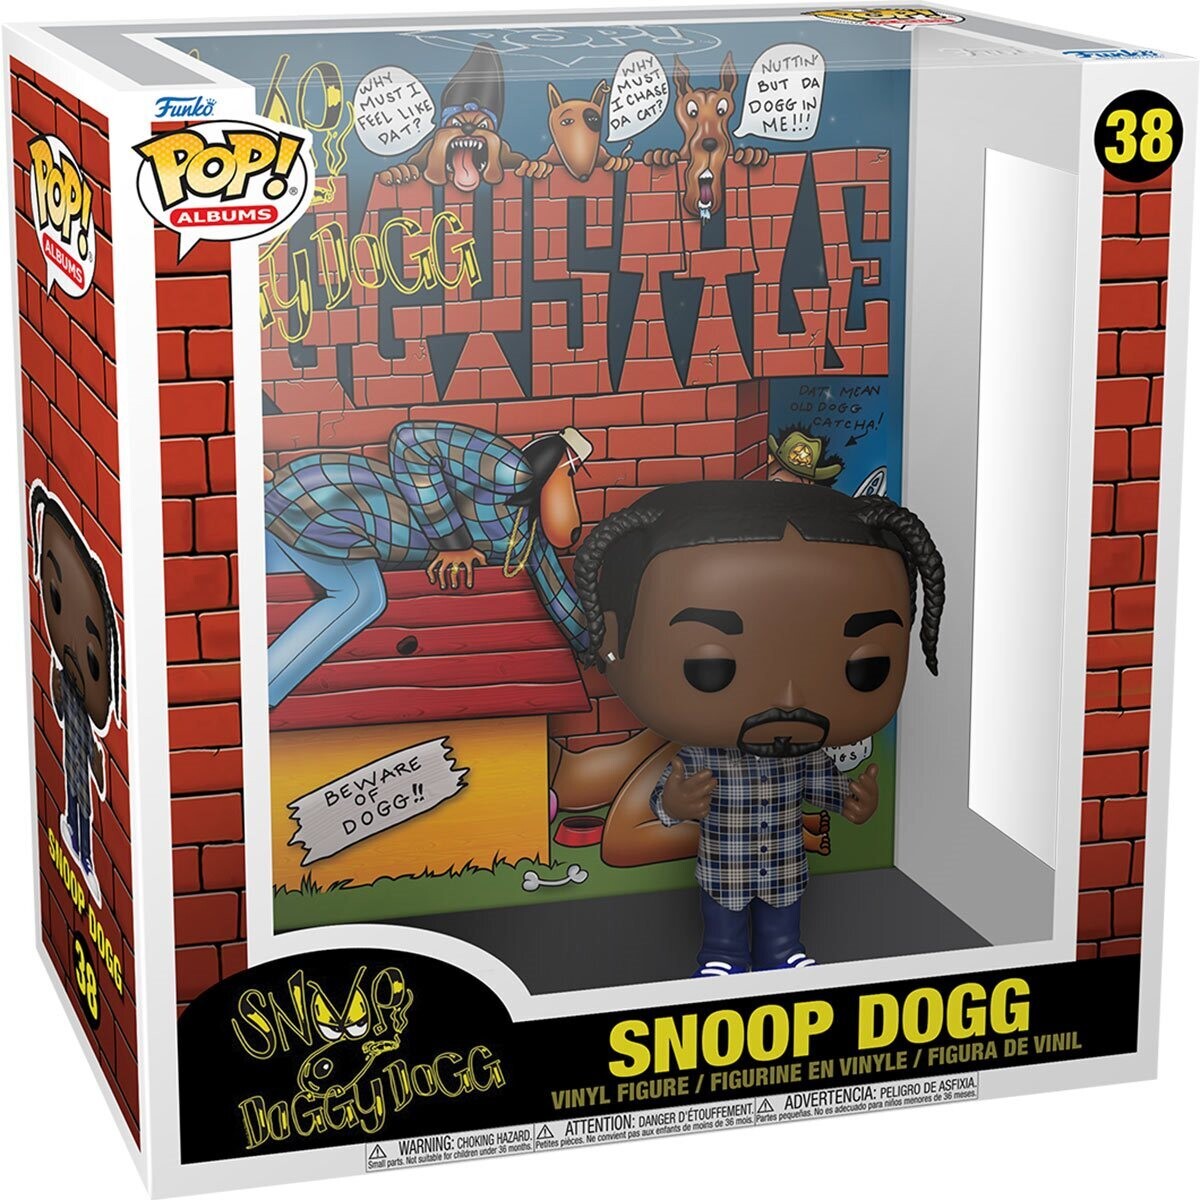 Snoop Dogg "Doggystyle" POP! Albums #38 Vinyl Figure